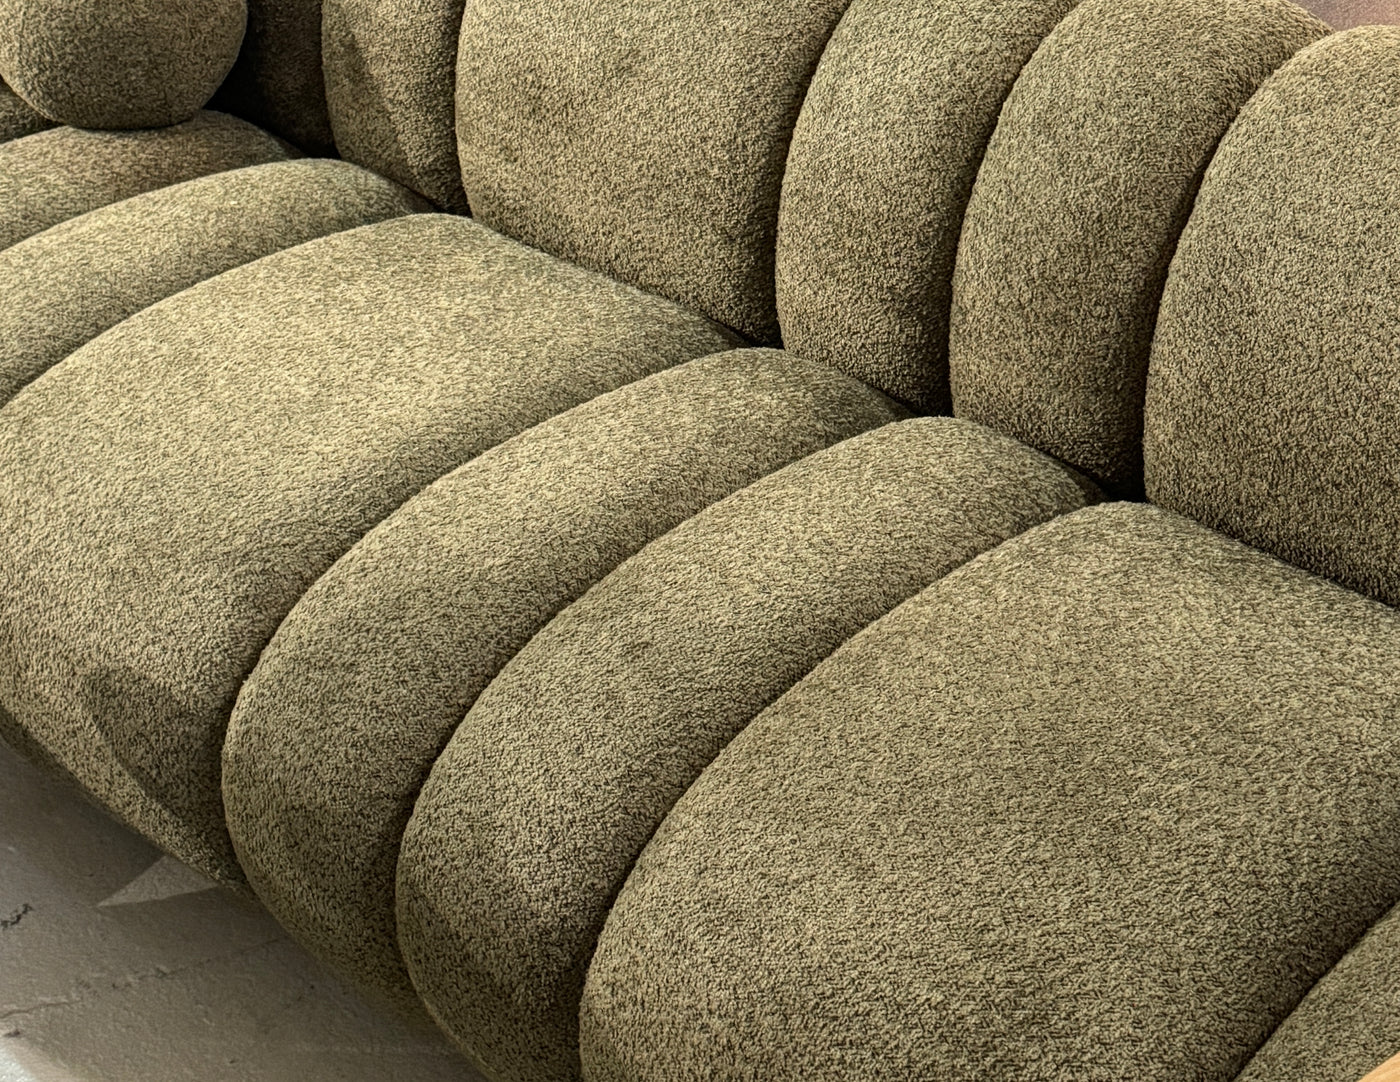 Retro Sofa - Future Classics Furniture